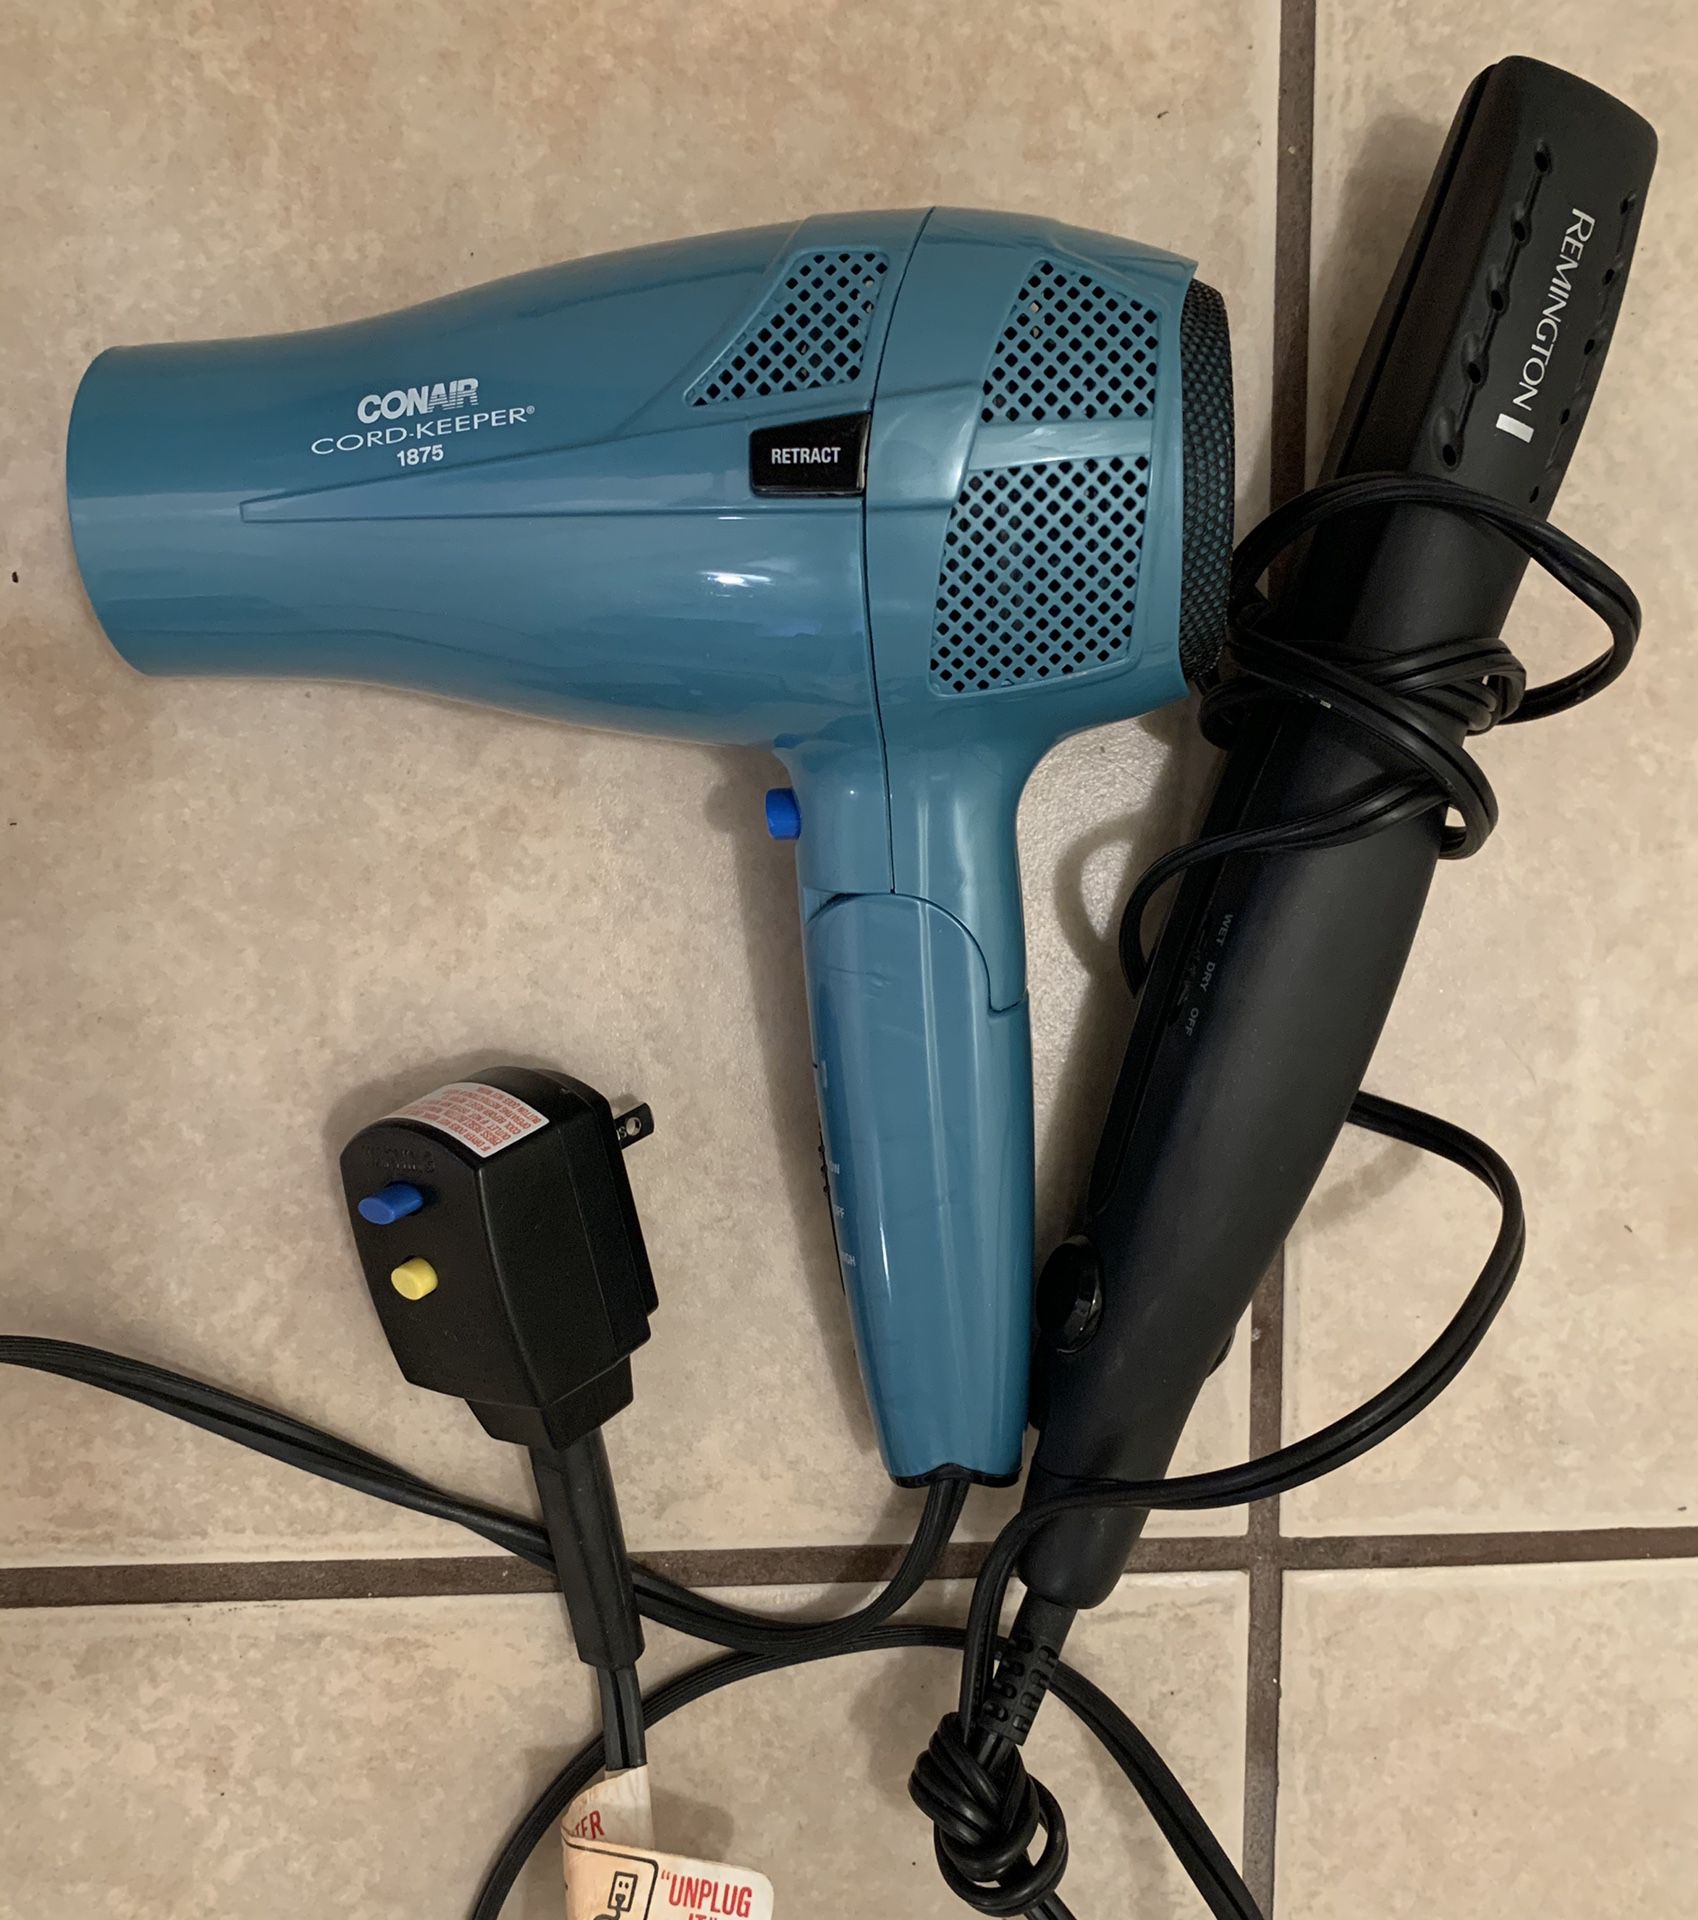 Wet/dry Remington hair straightener Conair blow dryer